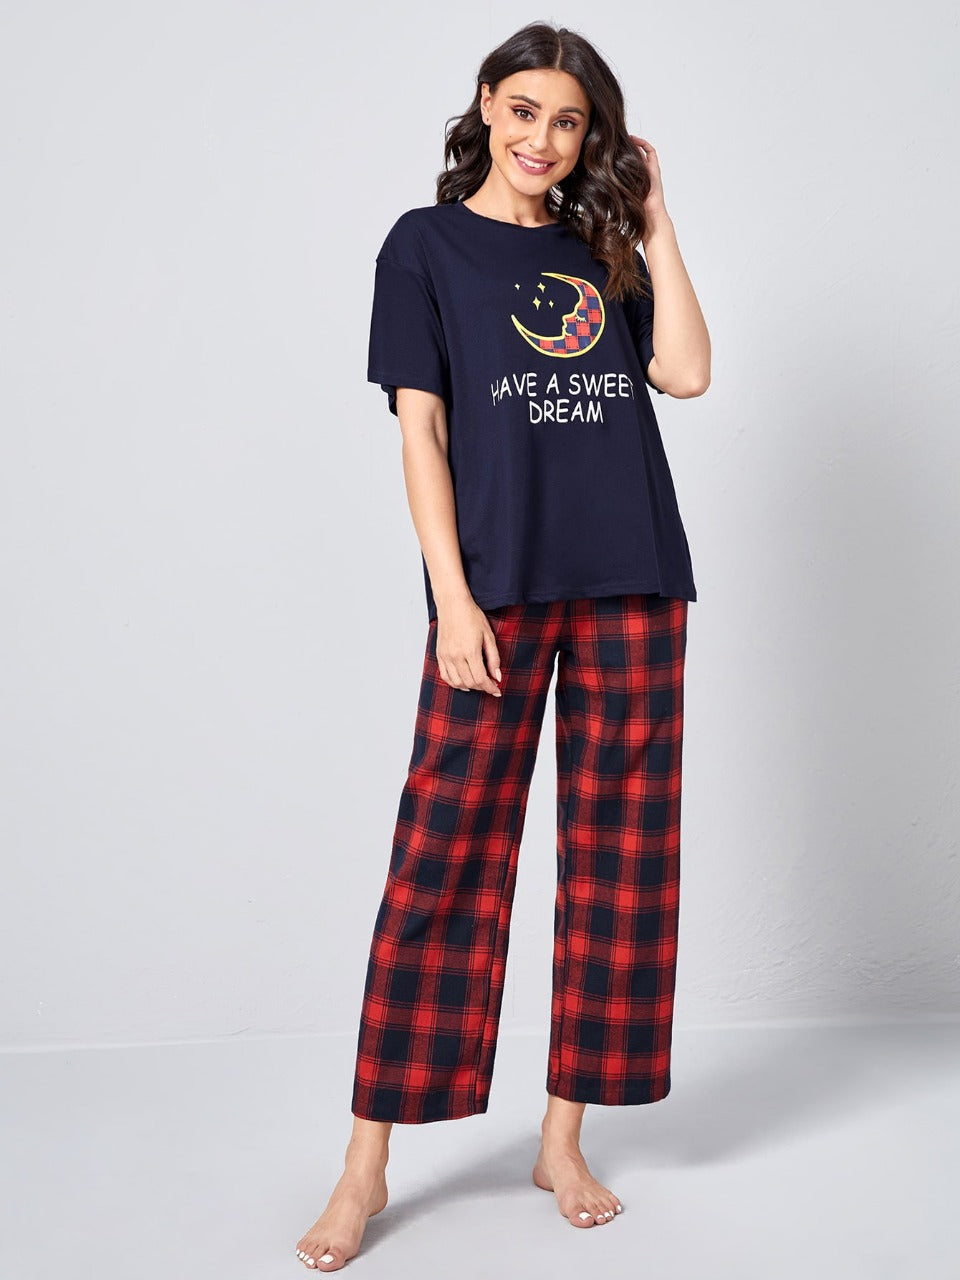 Have A Sweet Dreams Checkered Pajama Nightwear